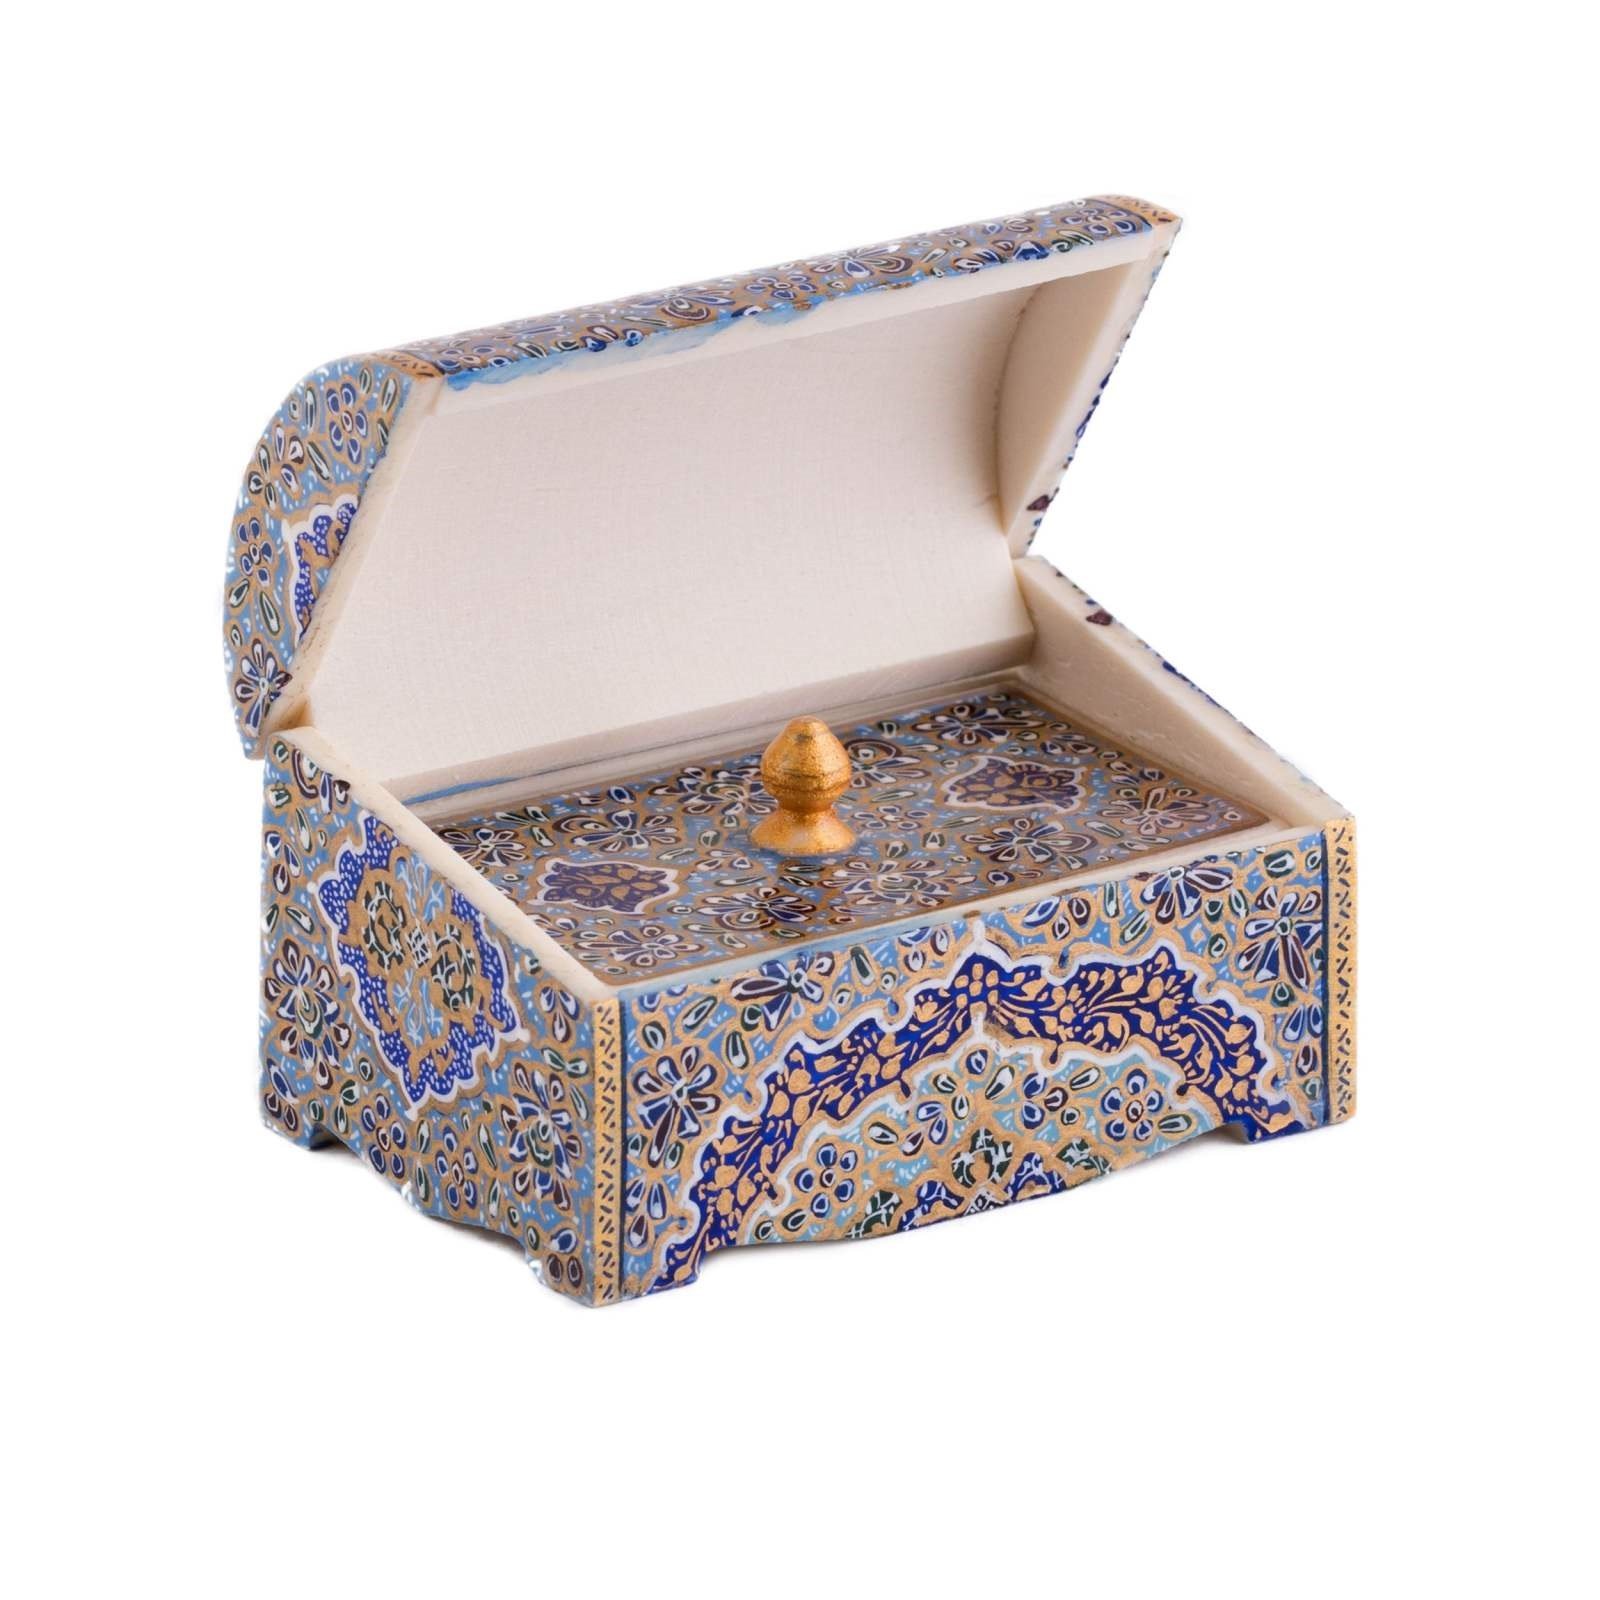 Joyero Bone Handicraft Tazhib 17 Design, Productos artesanales en hueso persa, Productos box artesania en hueso